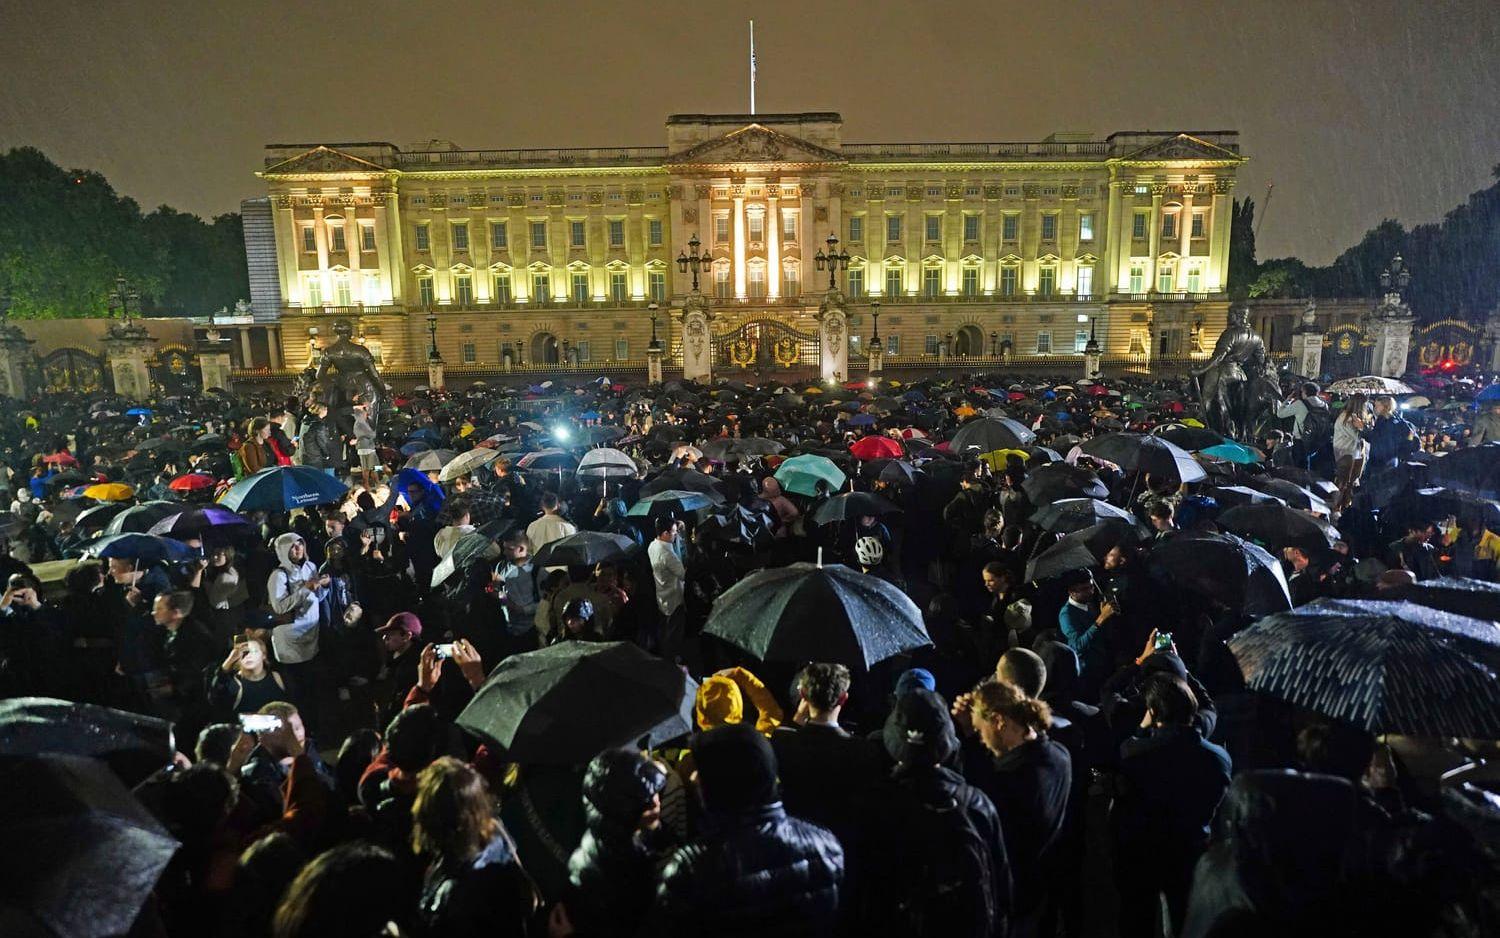 Tusentals Londonbor har samlats utanför Buckingham Palace. 